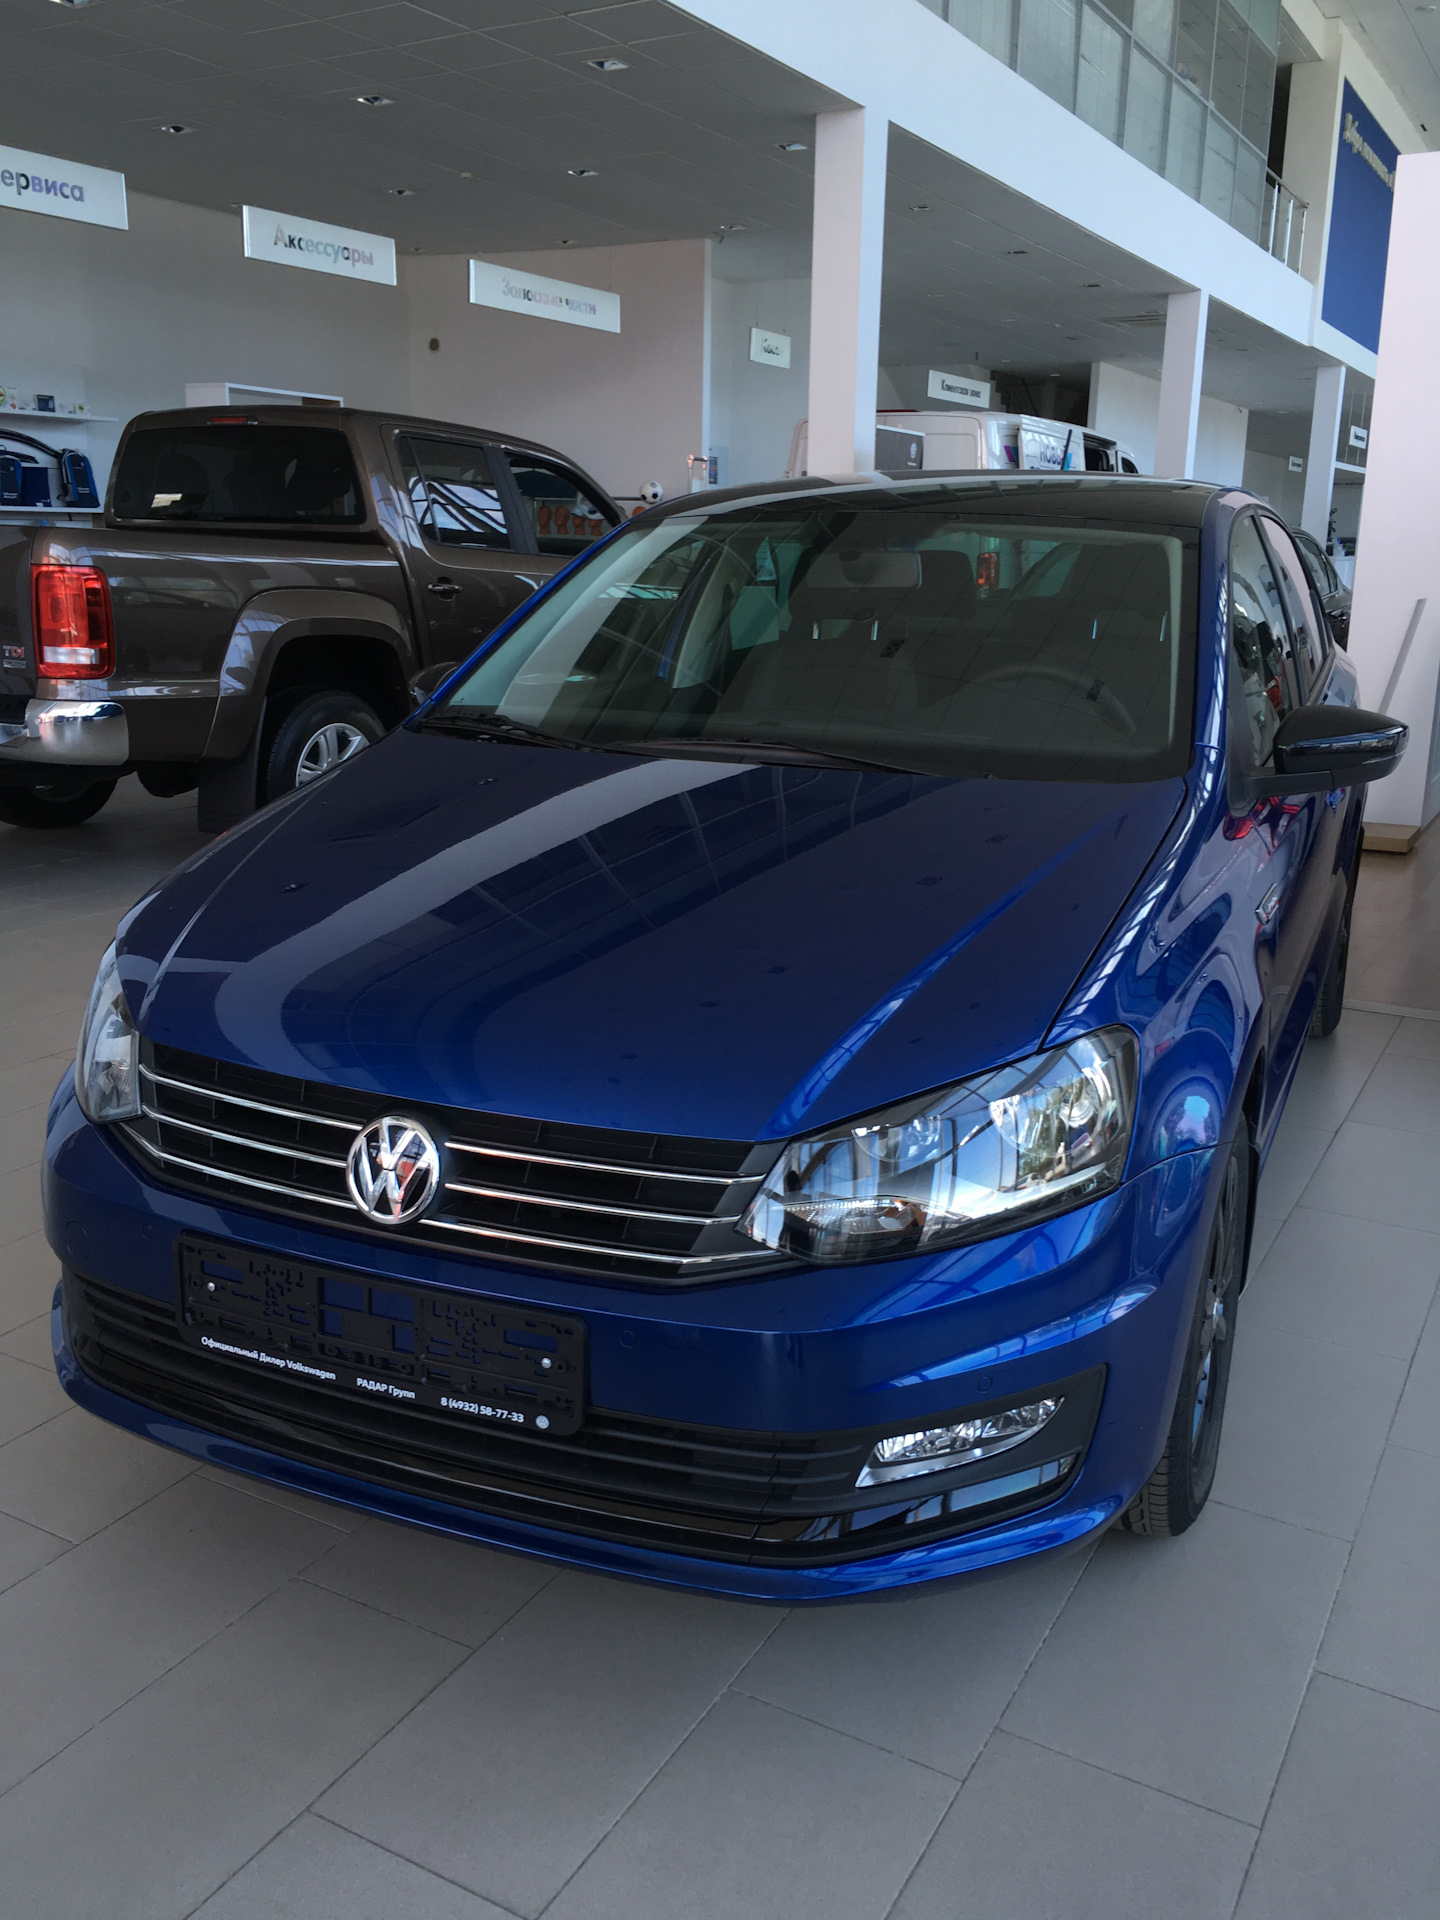 Volkswagen синий. Фольксваген поло синий металлик. Feef Blue поло Фольксваген. Volkswagen Polo синий Reef. Фольксваген поло 6 синий.